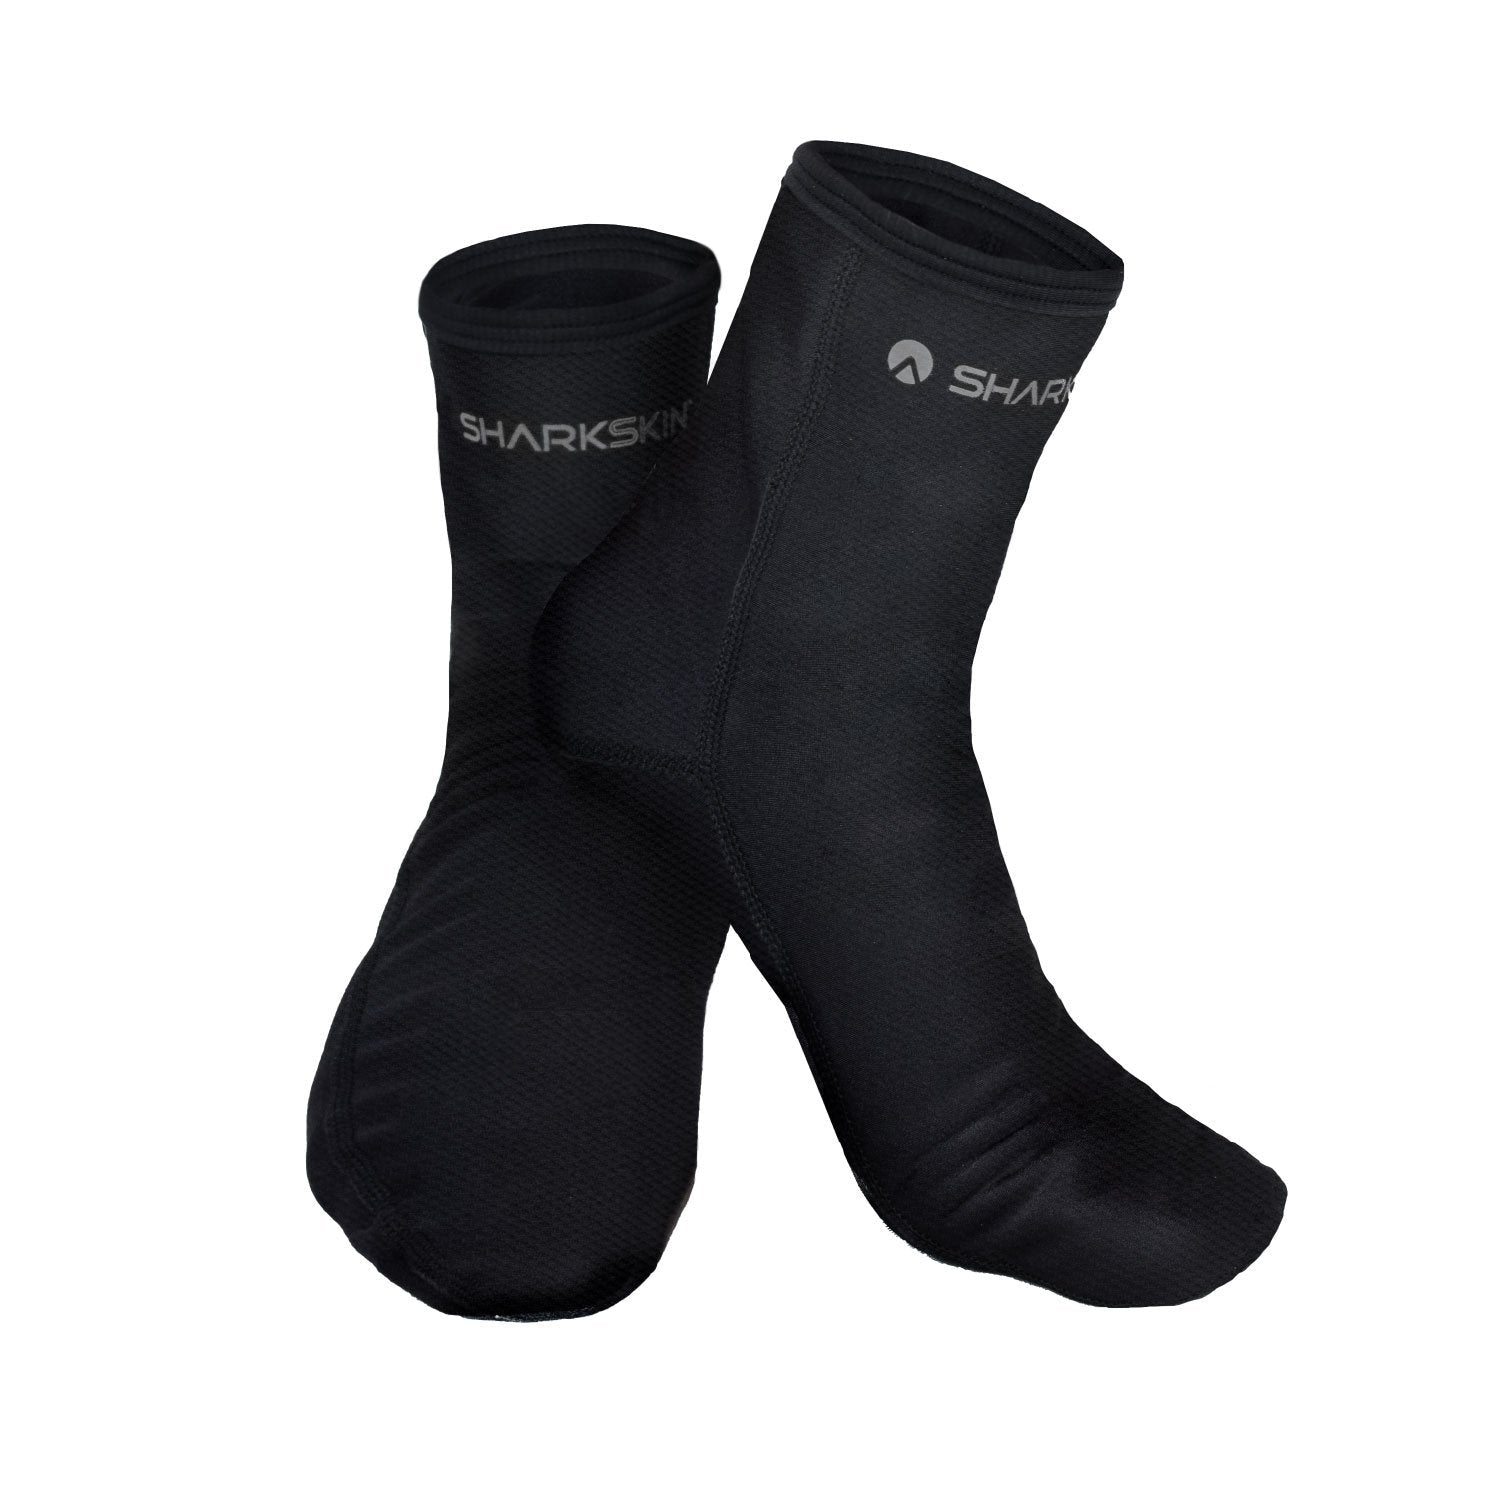 TITANIUM Chillproof Socks (SECONDS) – Sharkskin International